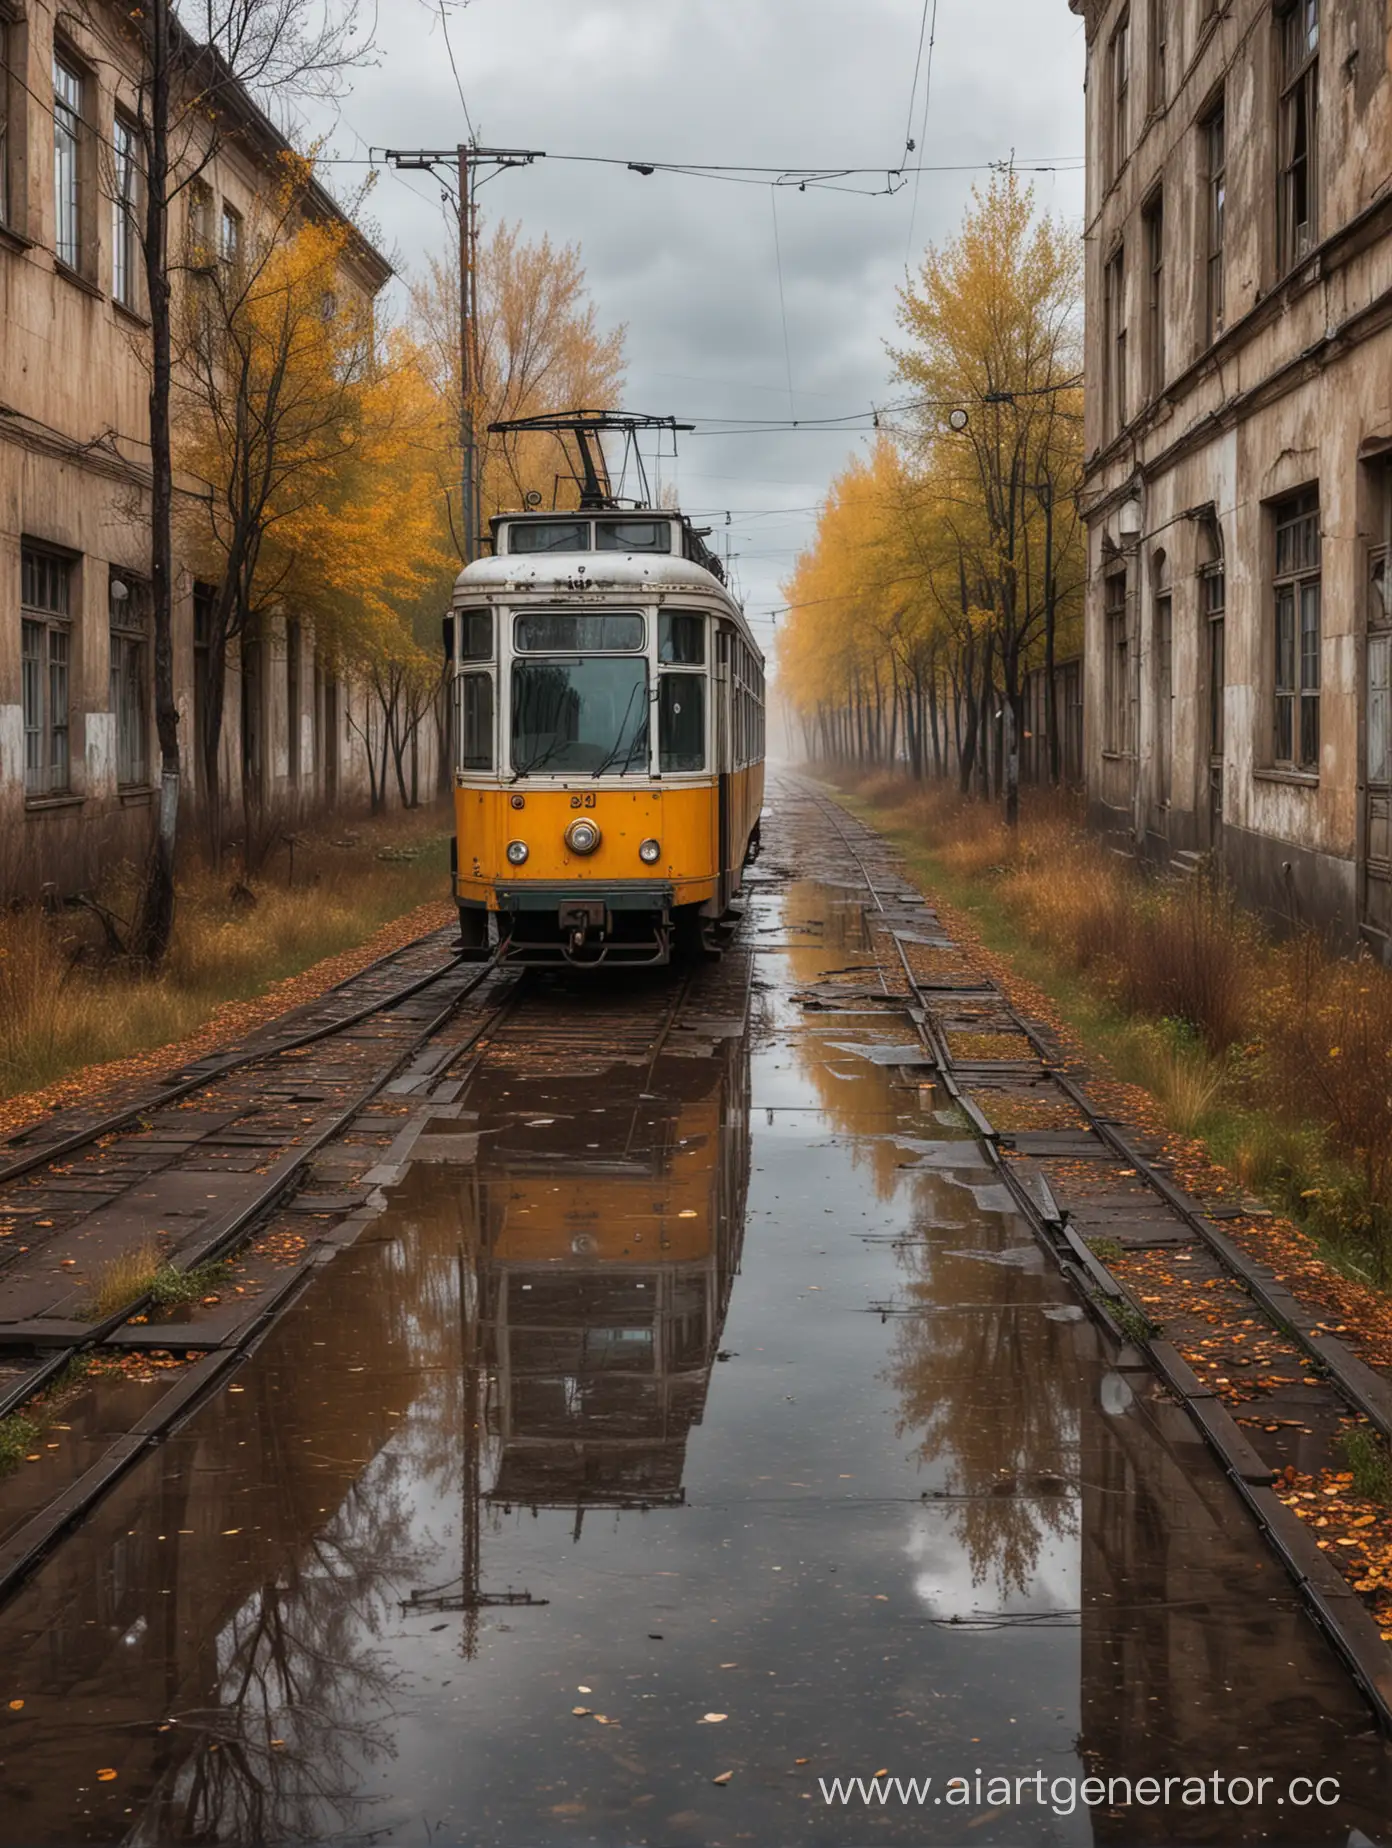 Abandoned-Tram-in-Russian-Courtyard-Urban-Decay-Under-Autumn-Rain